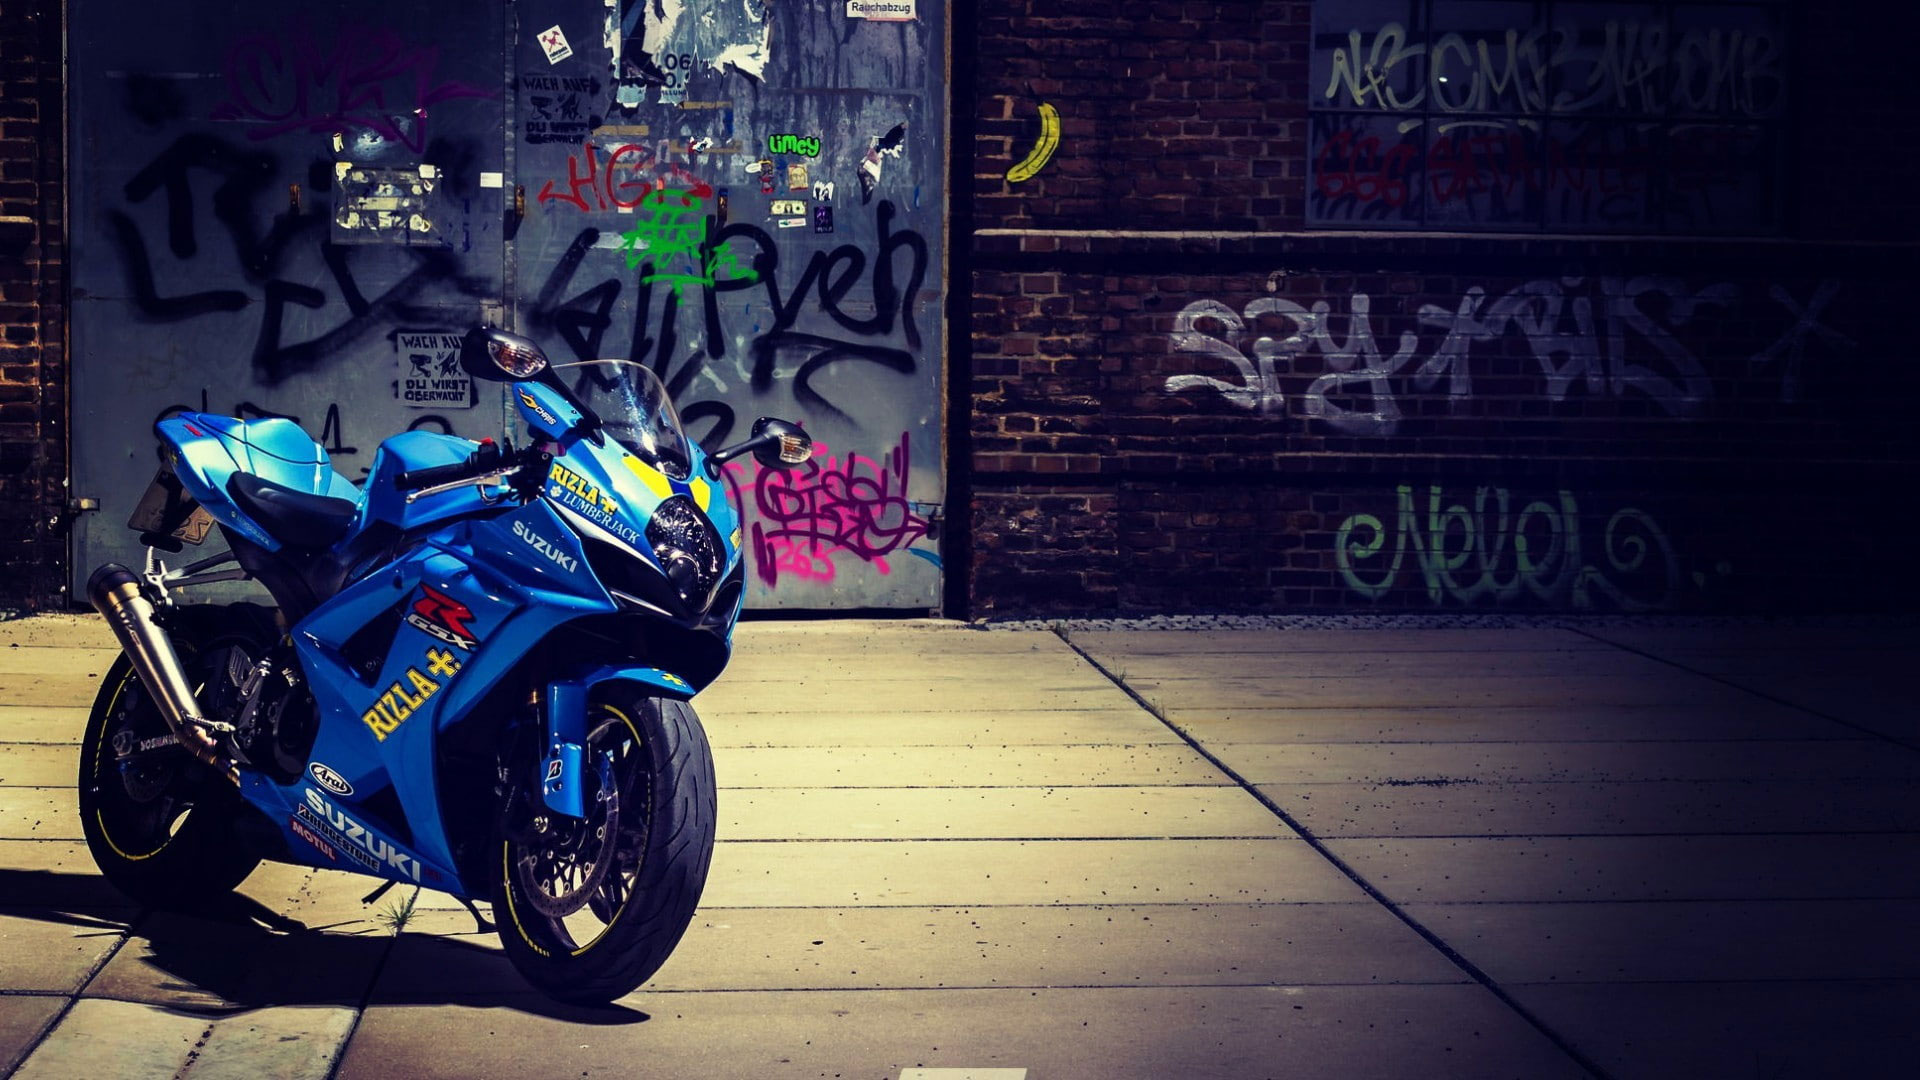 Blue sports bike wallpaper, Suzuki GSX-R, motorcycle, graffiti, urban, transportation